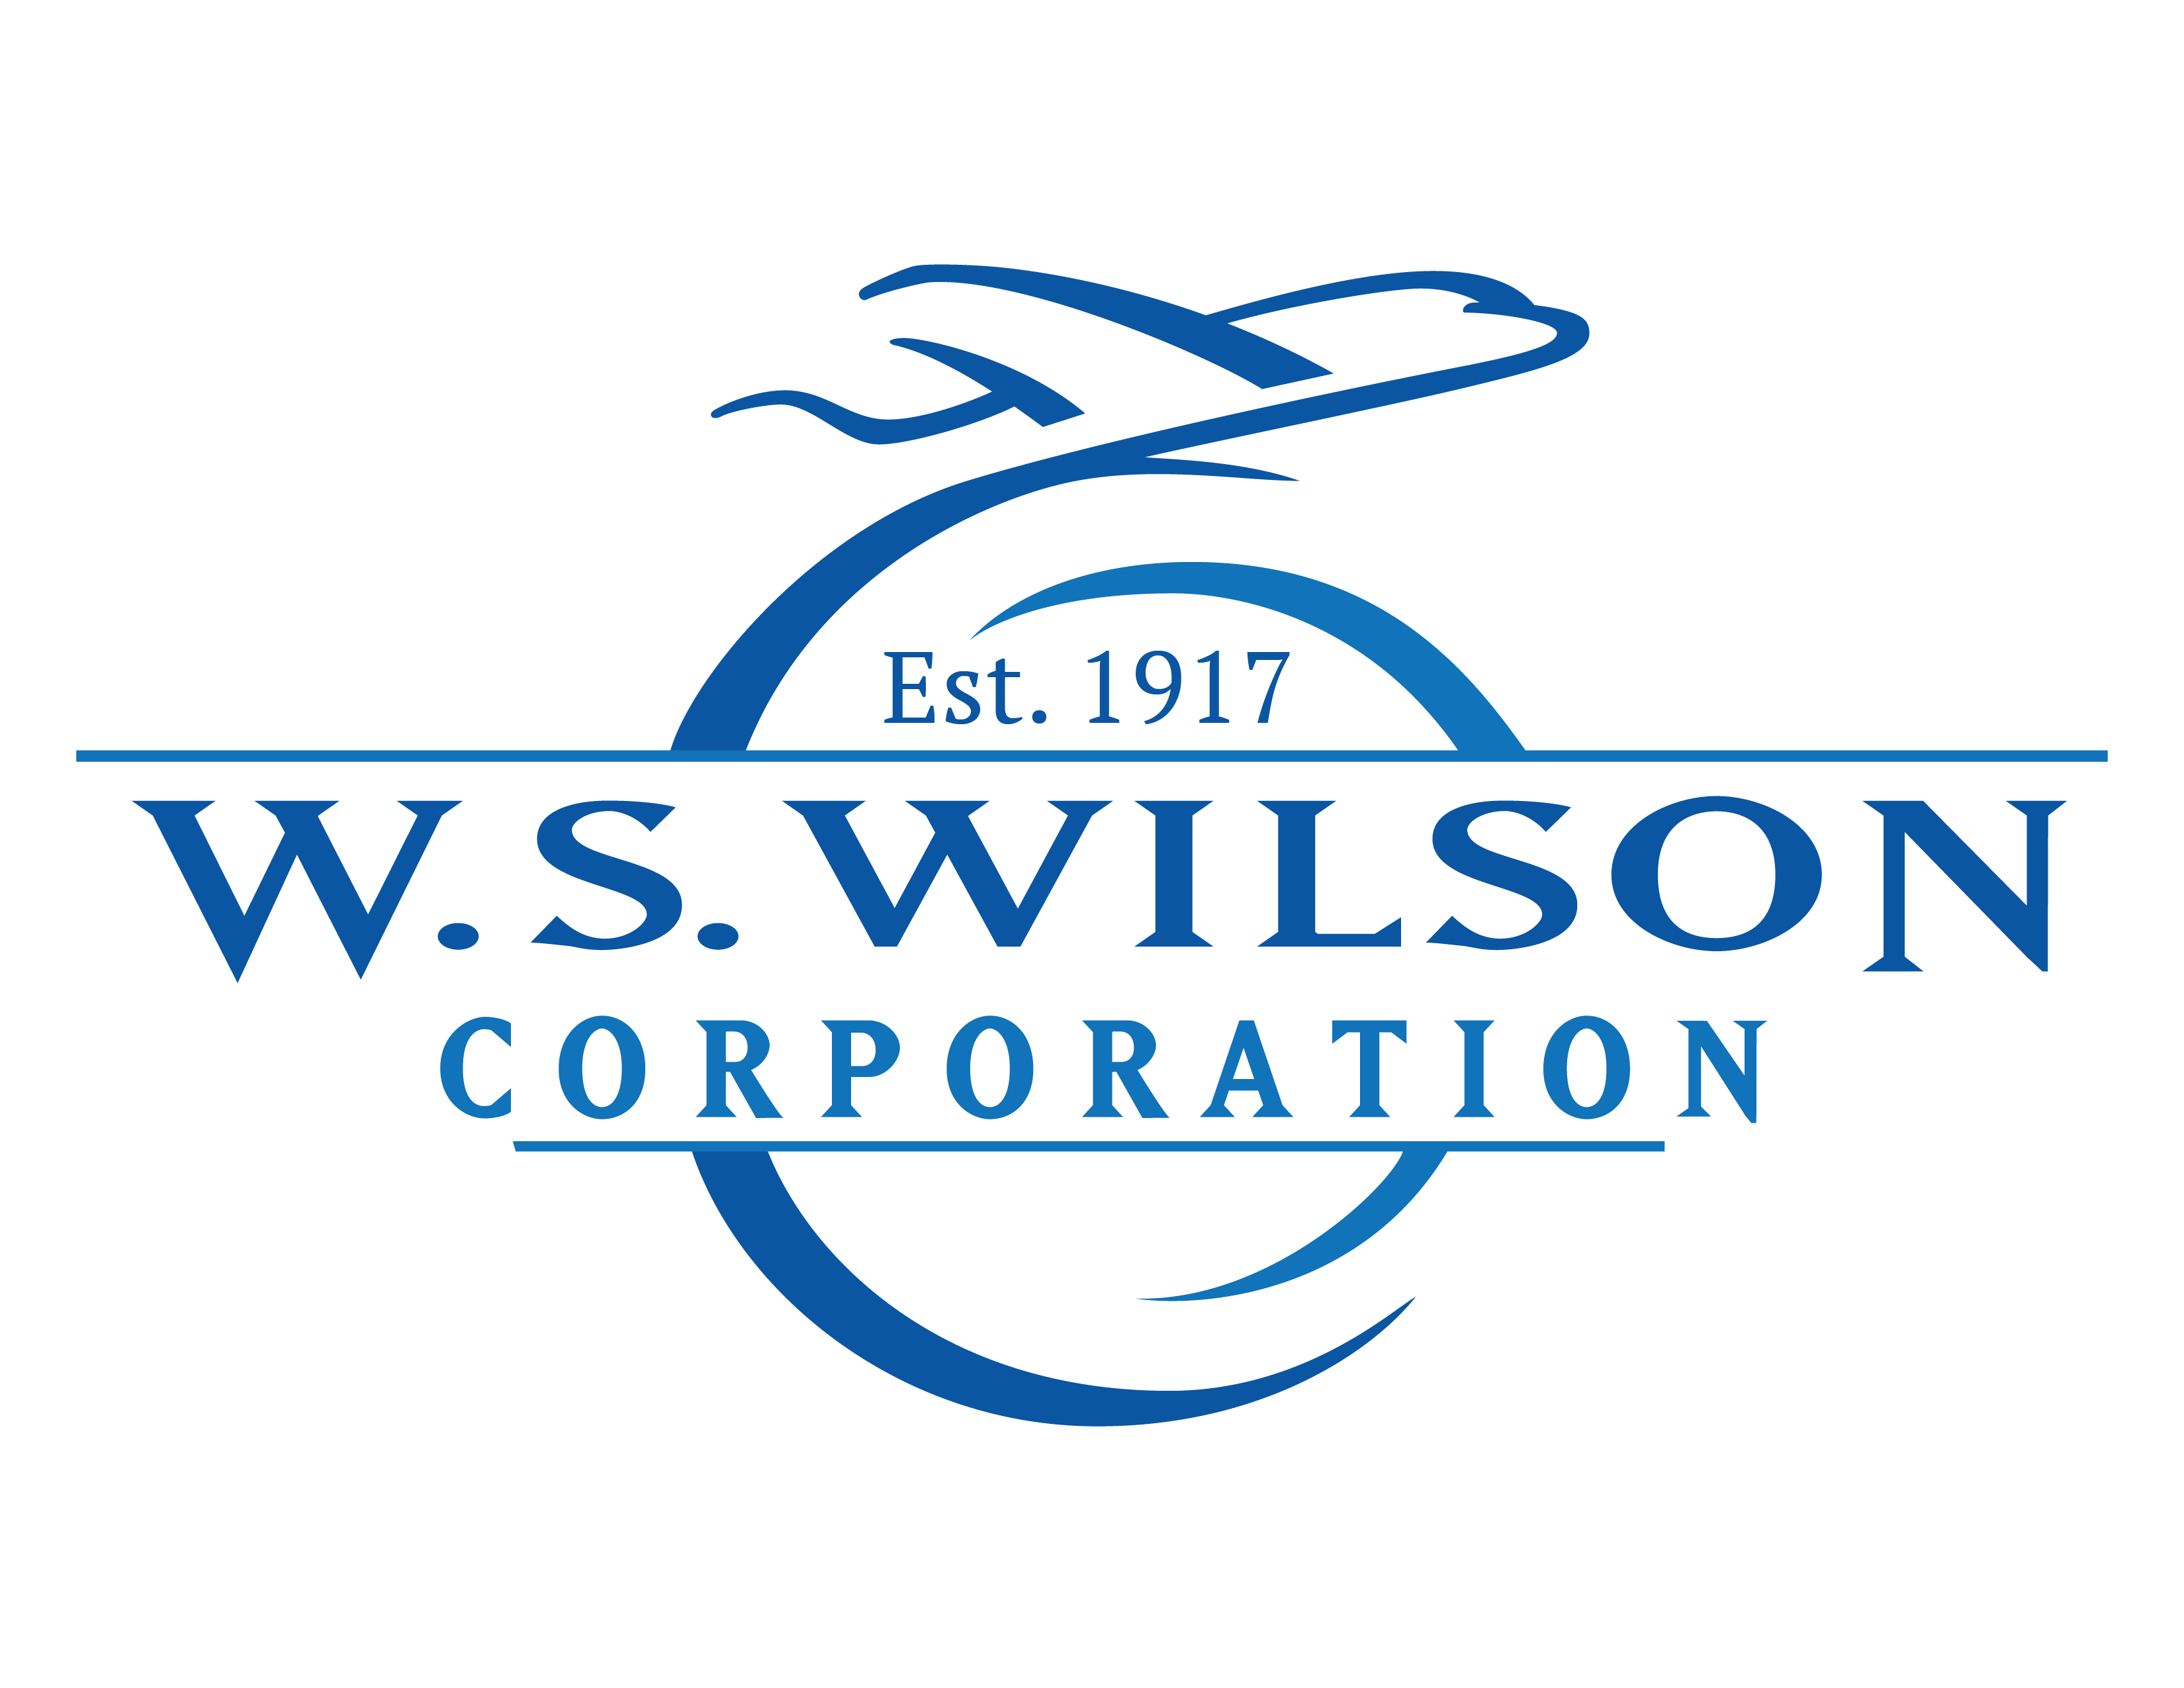 W.S. Wilson Corporation